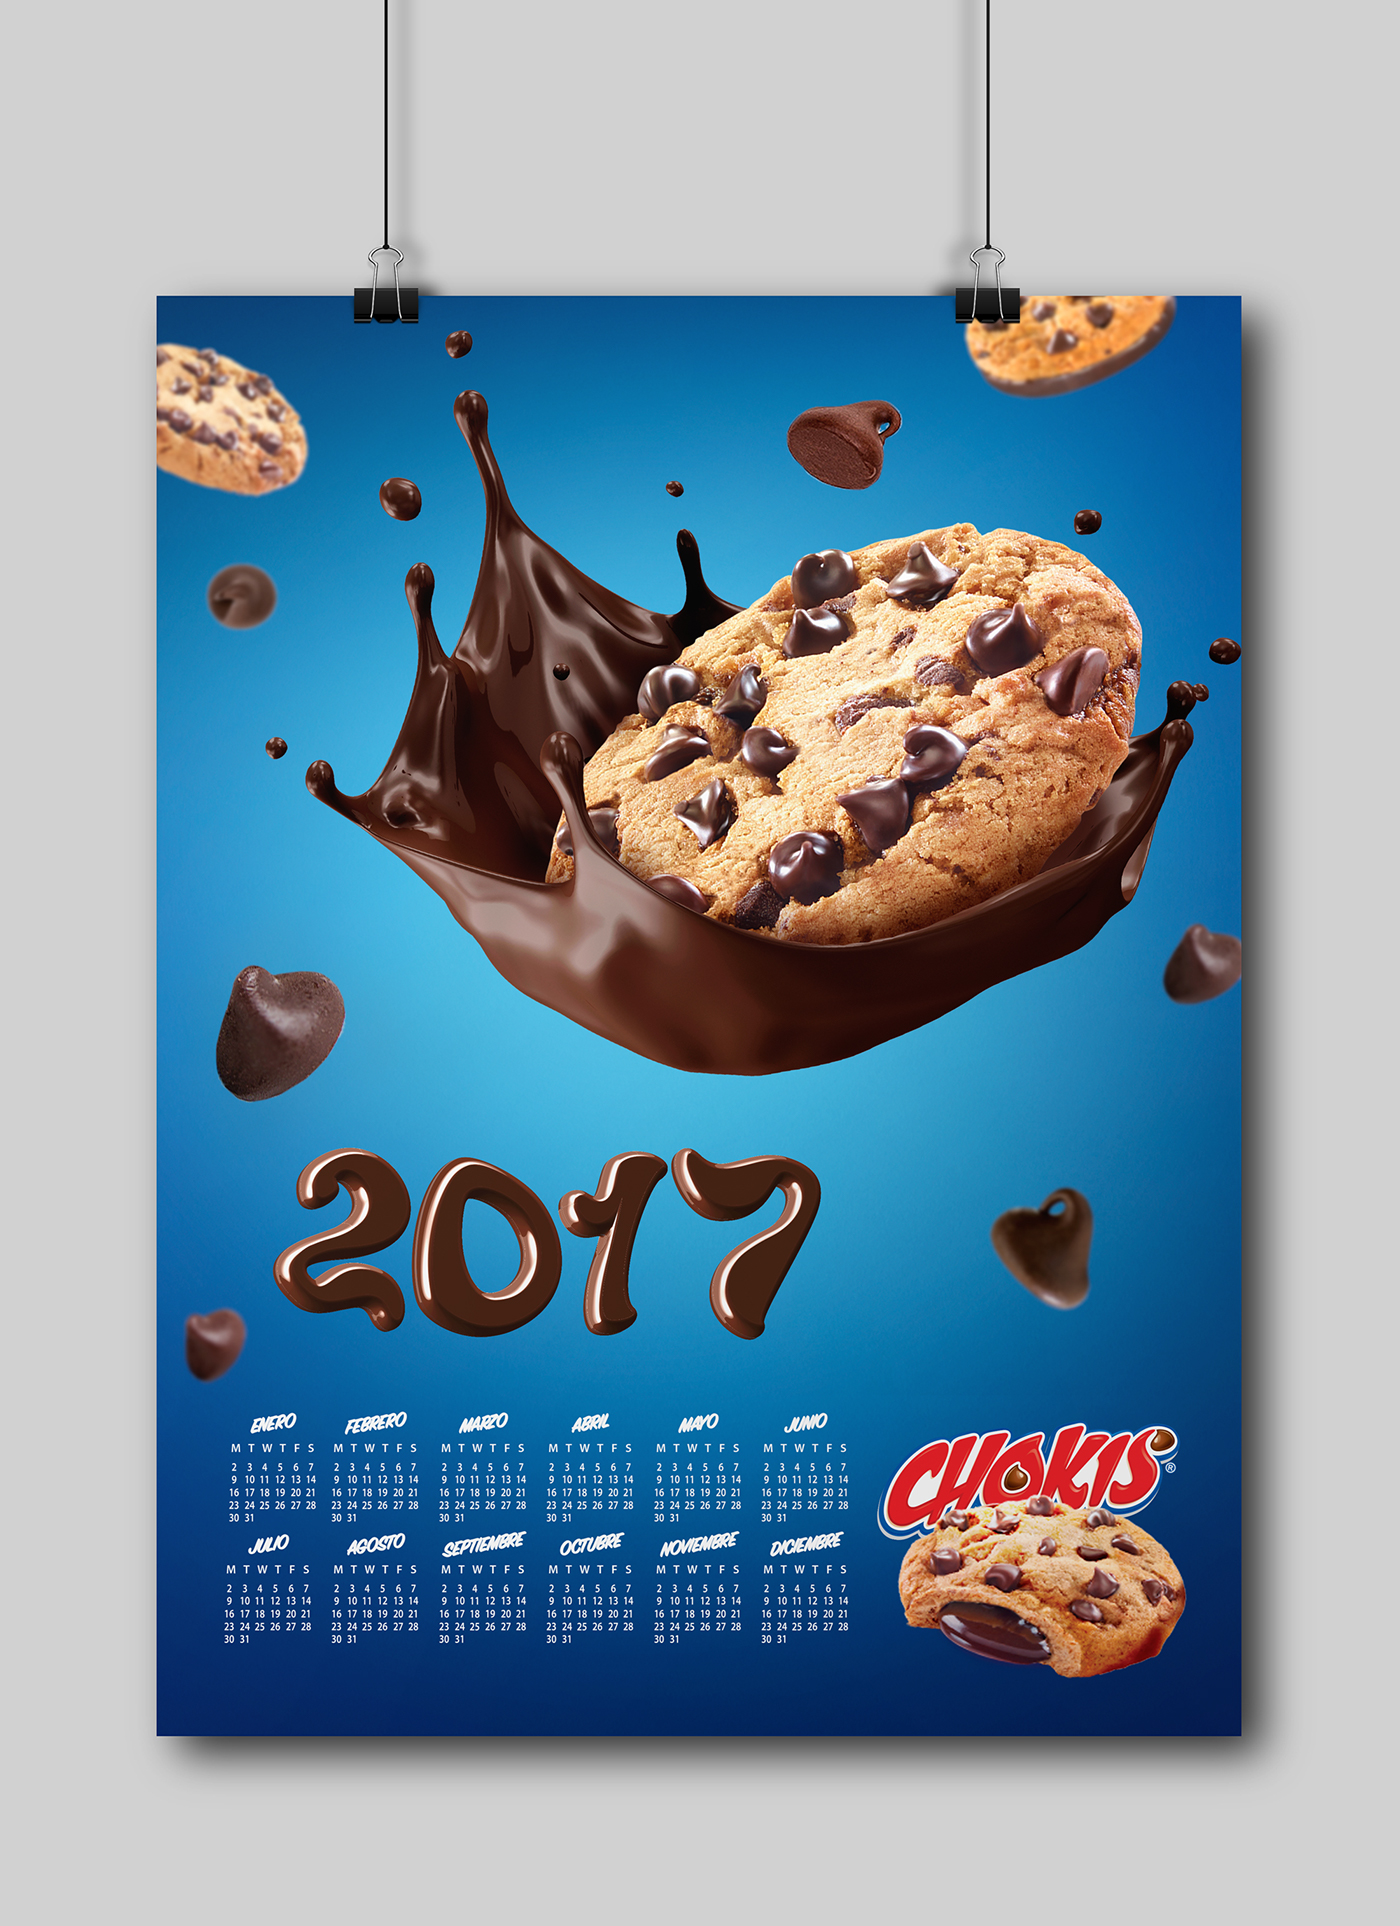 gamesa cookies Advertising  calendar emperador chokis ad Photography  Promotional